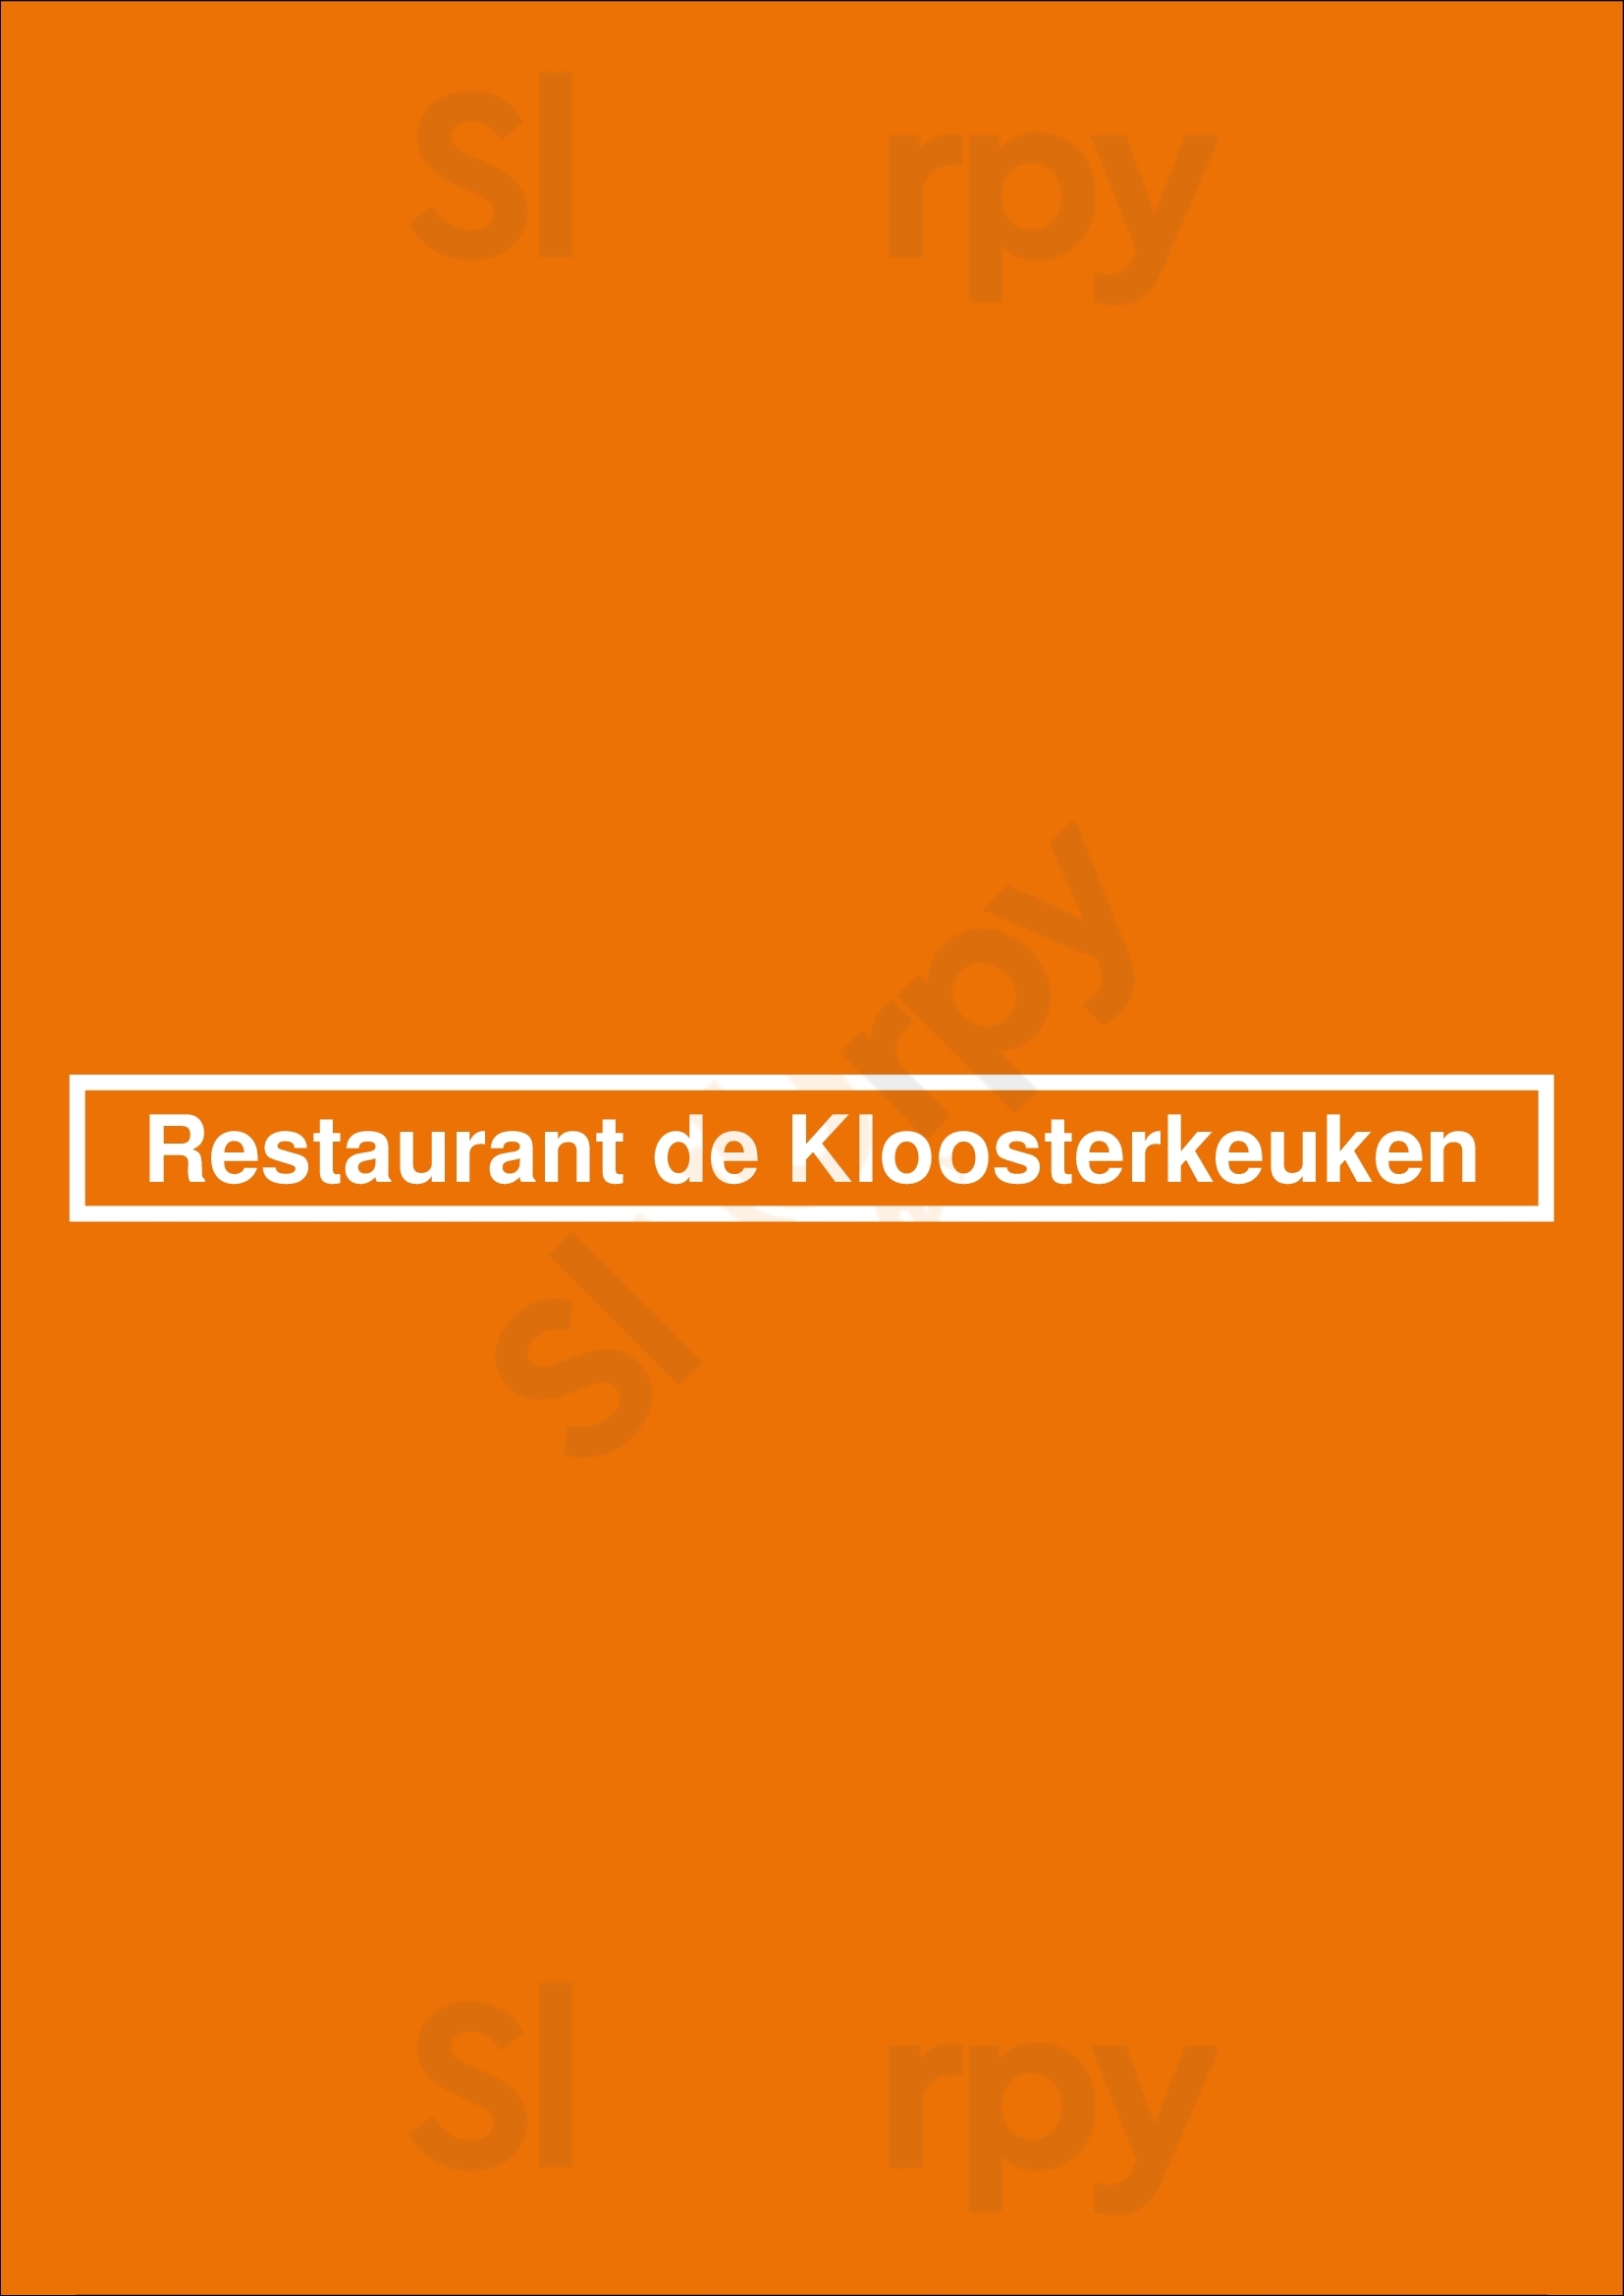 Restaurant De Kloosterkeuken Haarlem Menu - 1